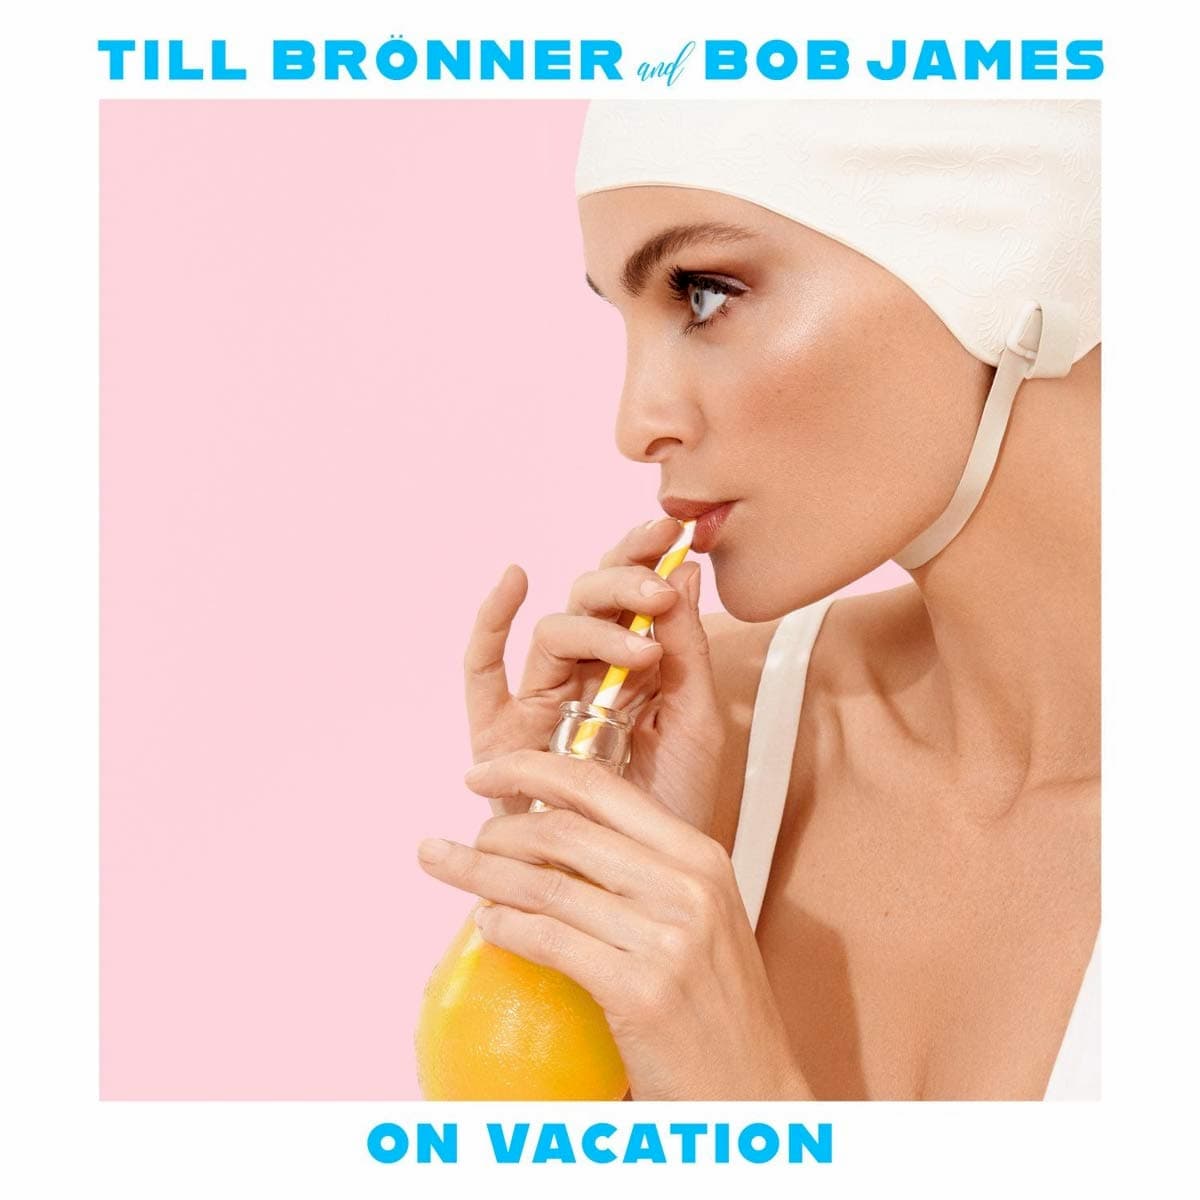 Neue Till Brönner CD mit Bob James On Vacation veröffentlicht